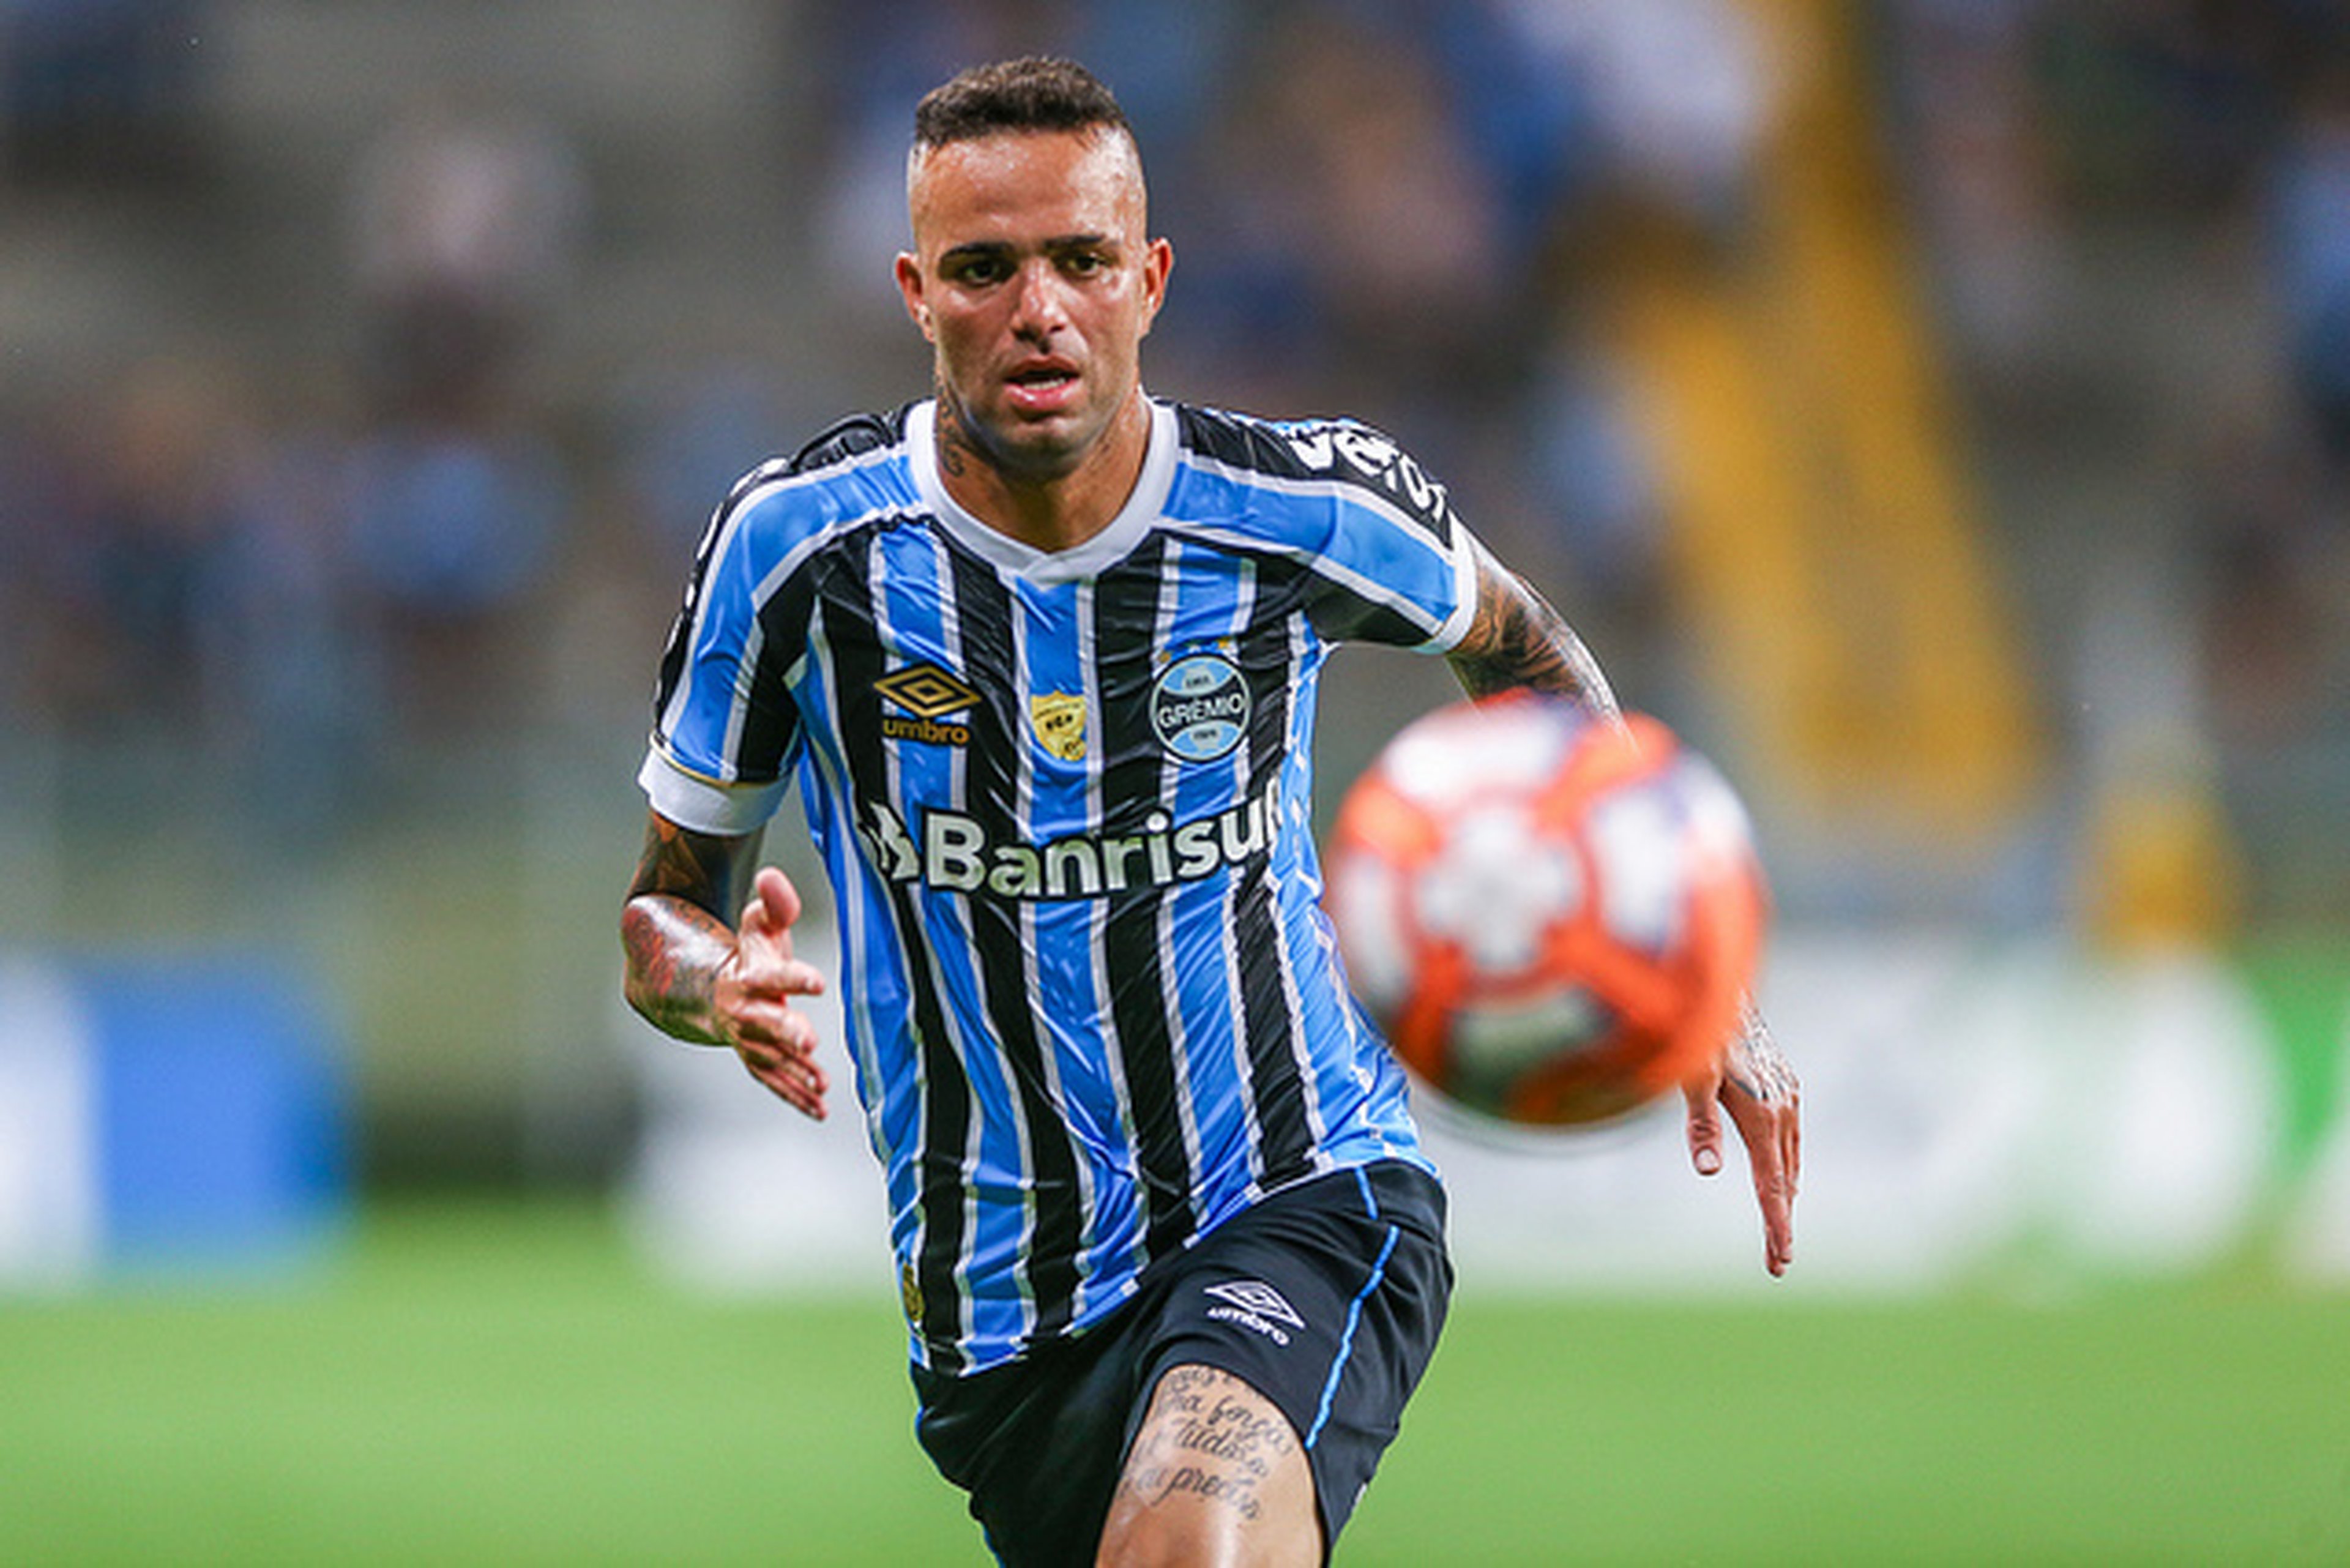 Lucas Uebel/Grêmio FBPA